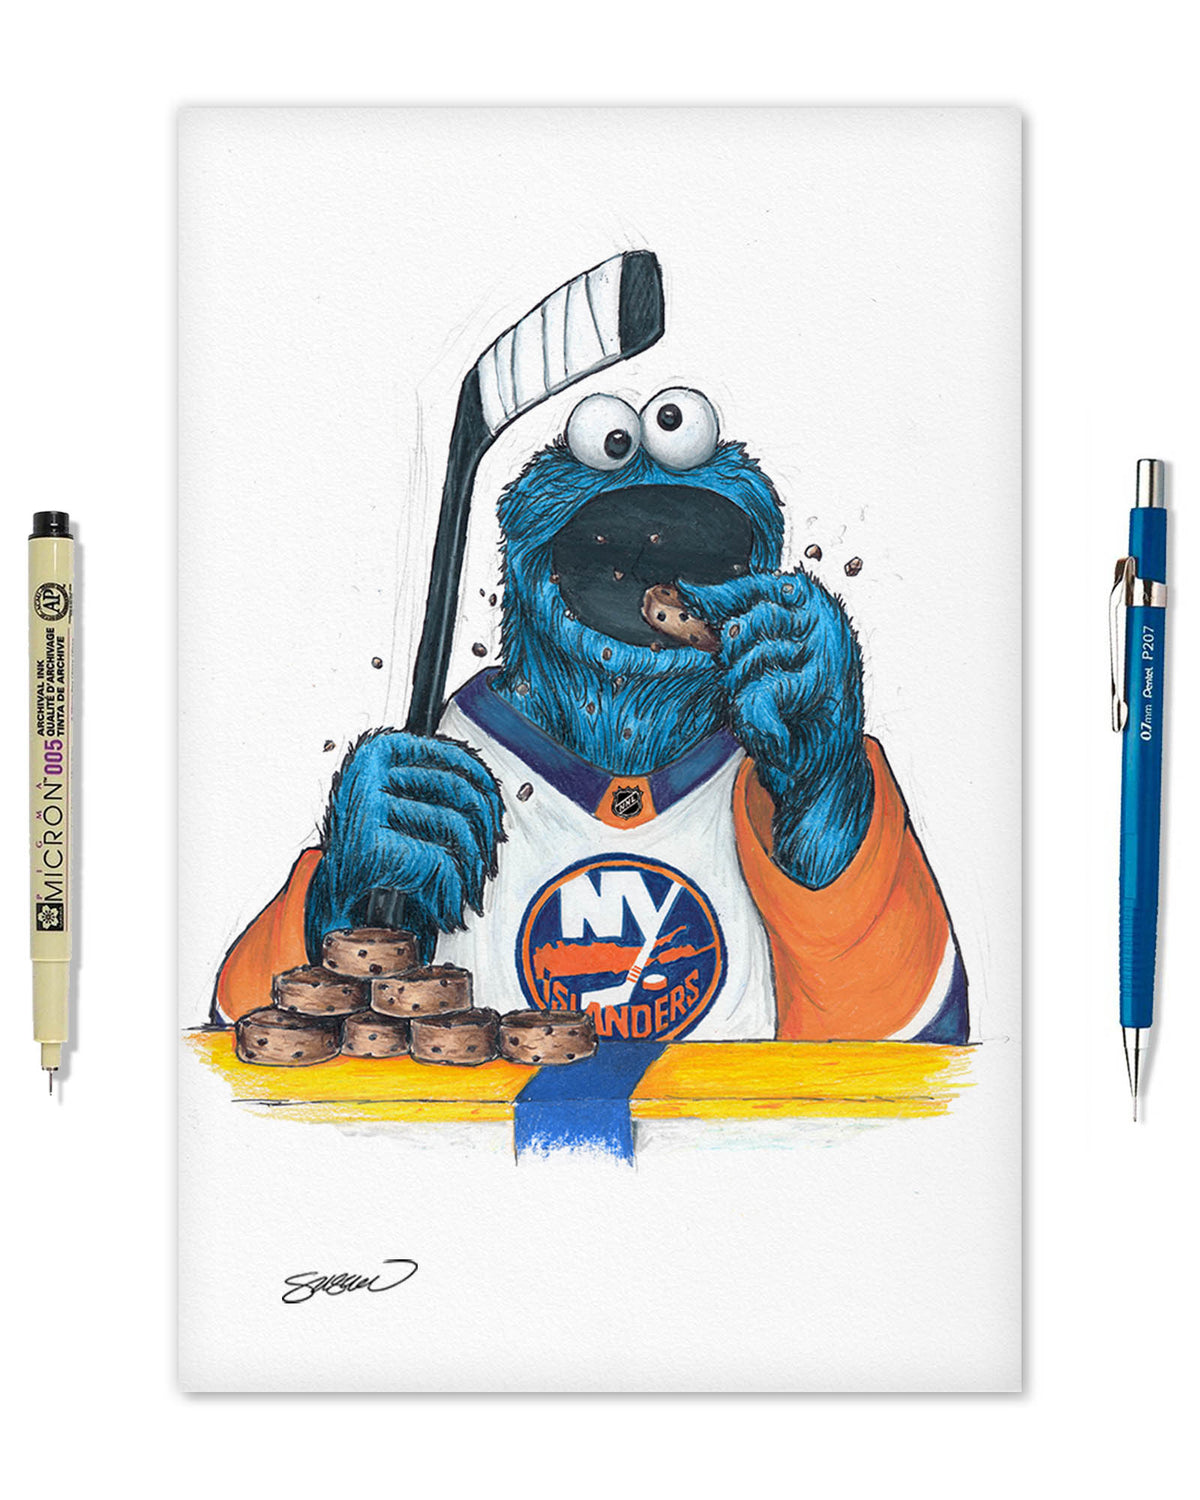 Cookie Monster x NHL Islanders Limited Edition Fine Art Print